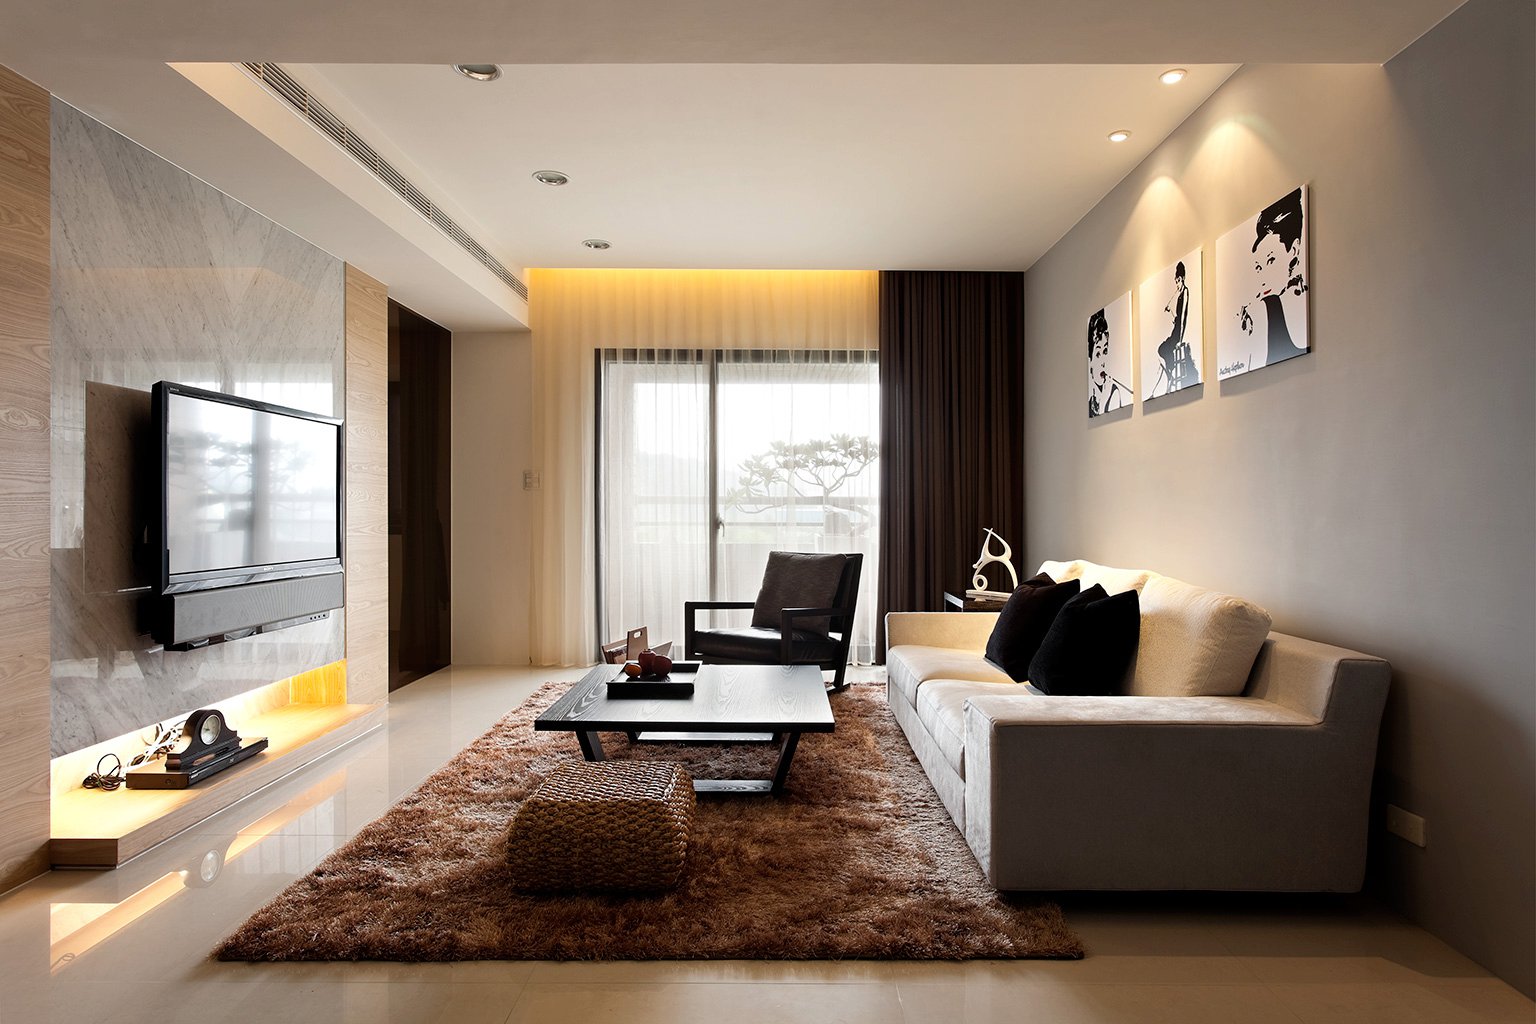 Modern Minimalist Decor With A Homey Flow, Modern Decorating Living Room